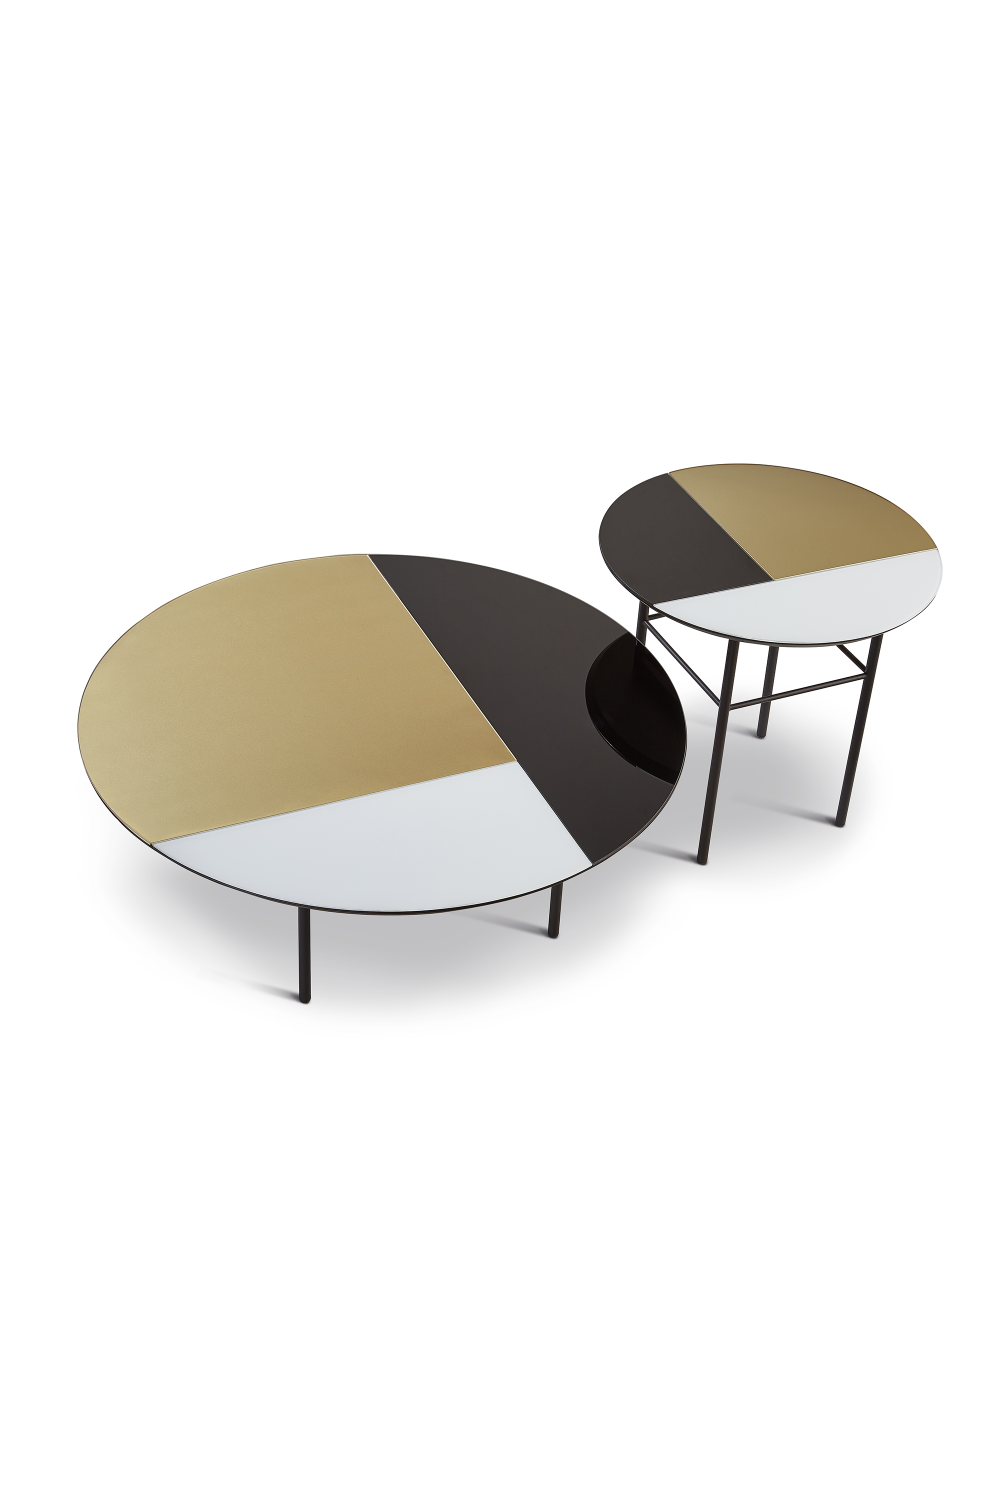 Tri-Color Round Coffee Table | Liang & Eimil Orphenus | OROA.com